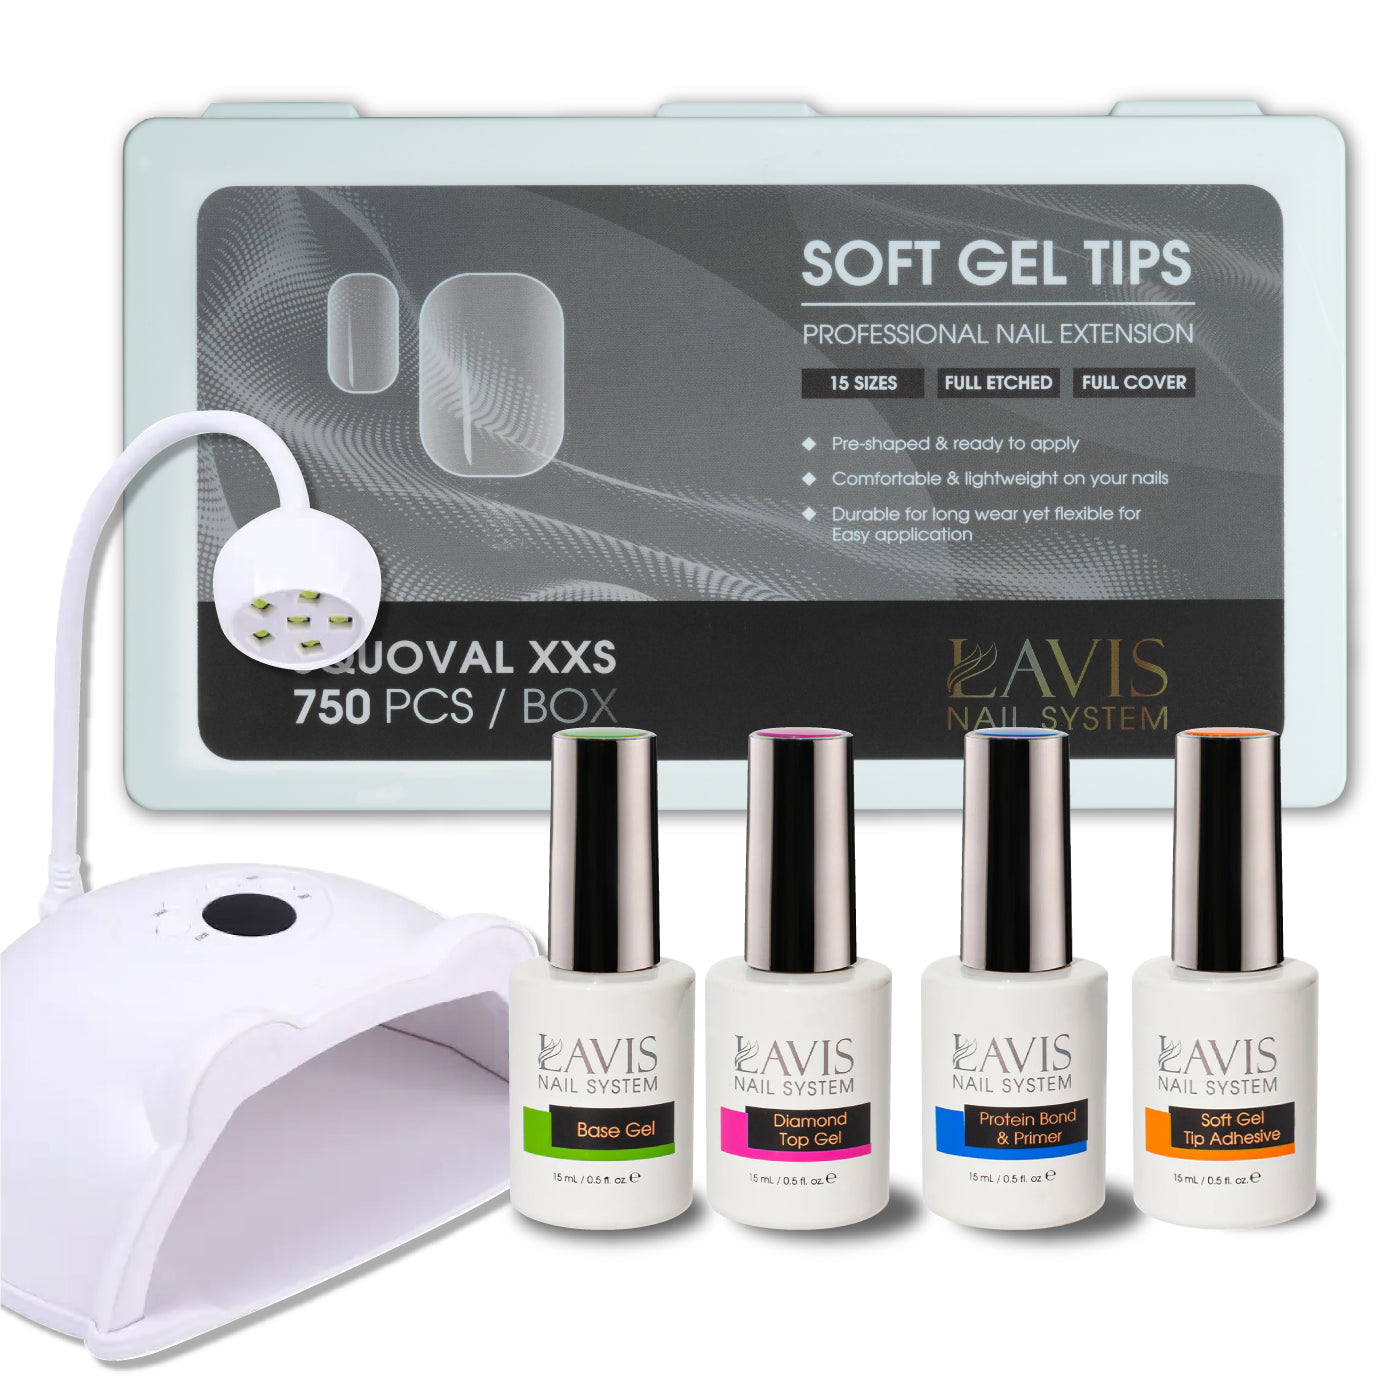 LAVIS - Squoval XXS Full Etched Soft Gel Tips + LED/UV Nail Lamps 48W HS-887 + LAVIS Gel Base, Diamond Top, Protein Bond & Primer, Soft Gel Tip Adhesive - 0.5 oz